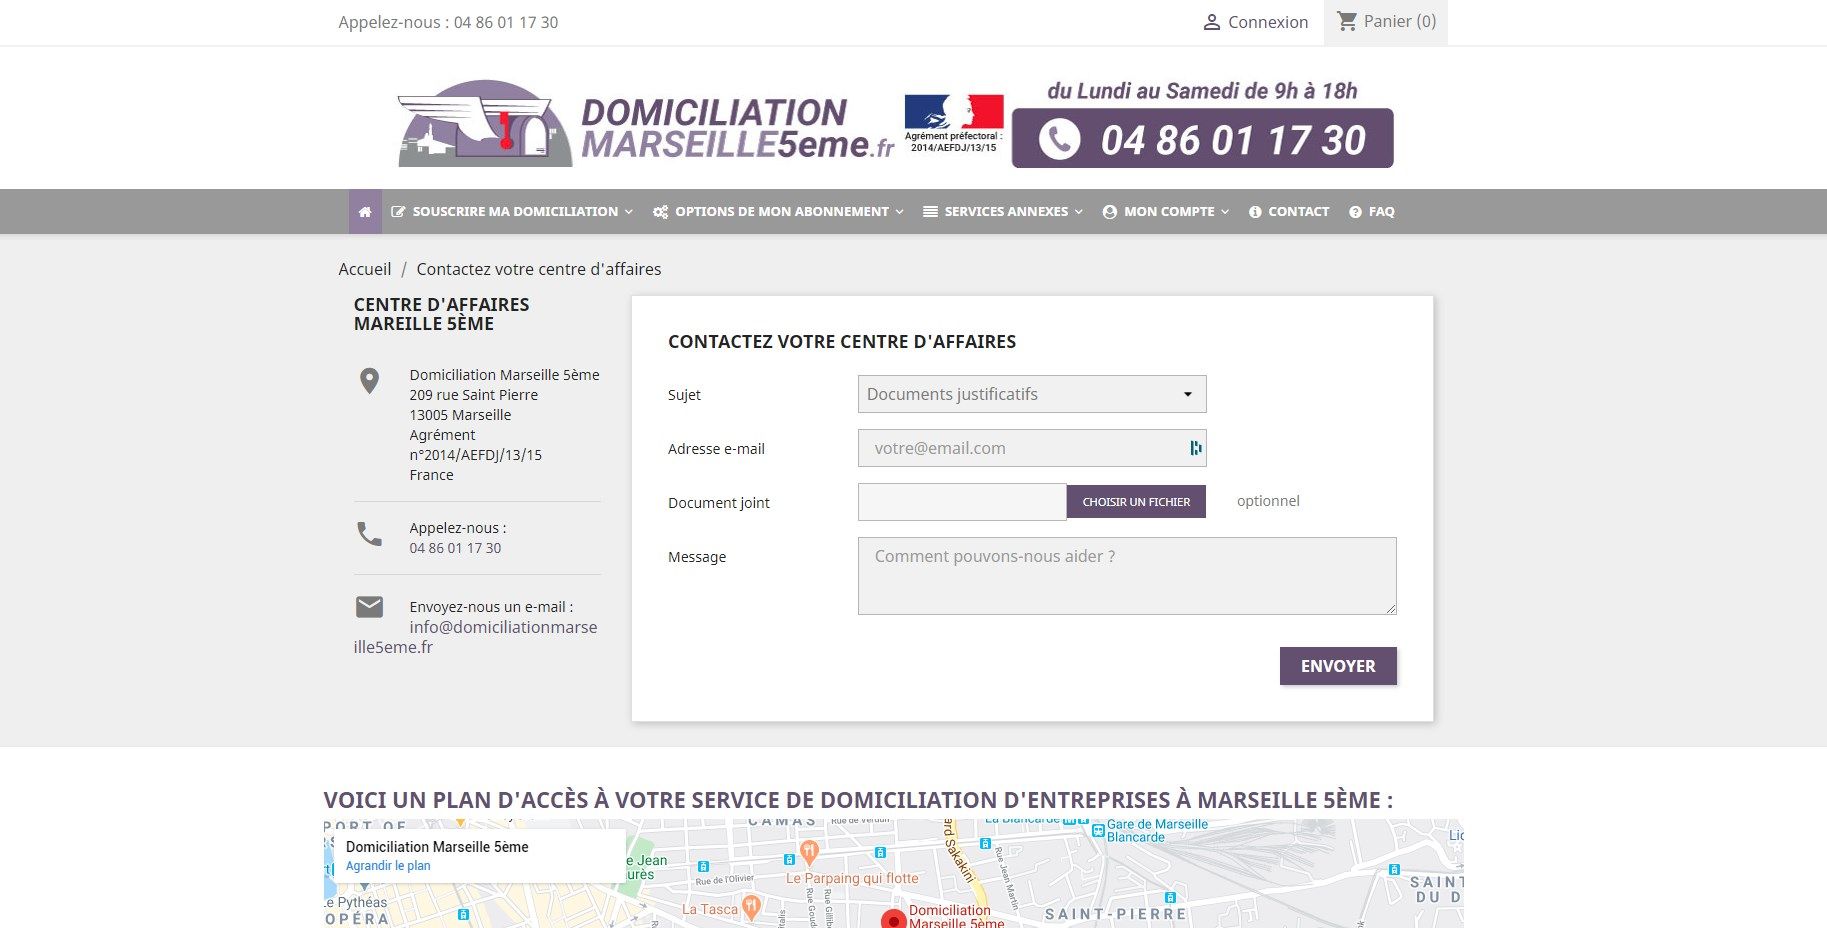 Domiciliation Marseille 5ème